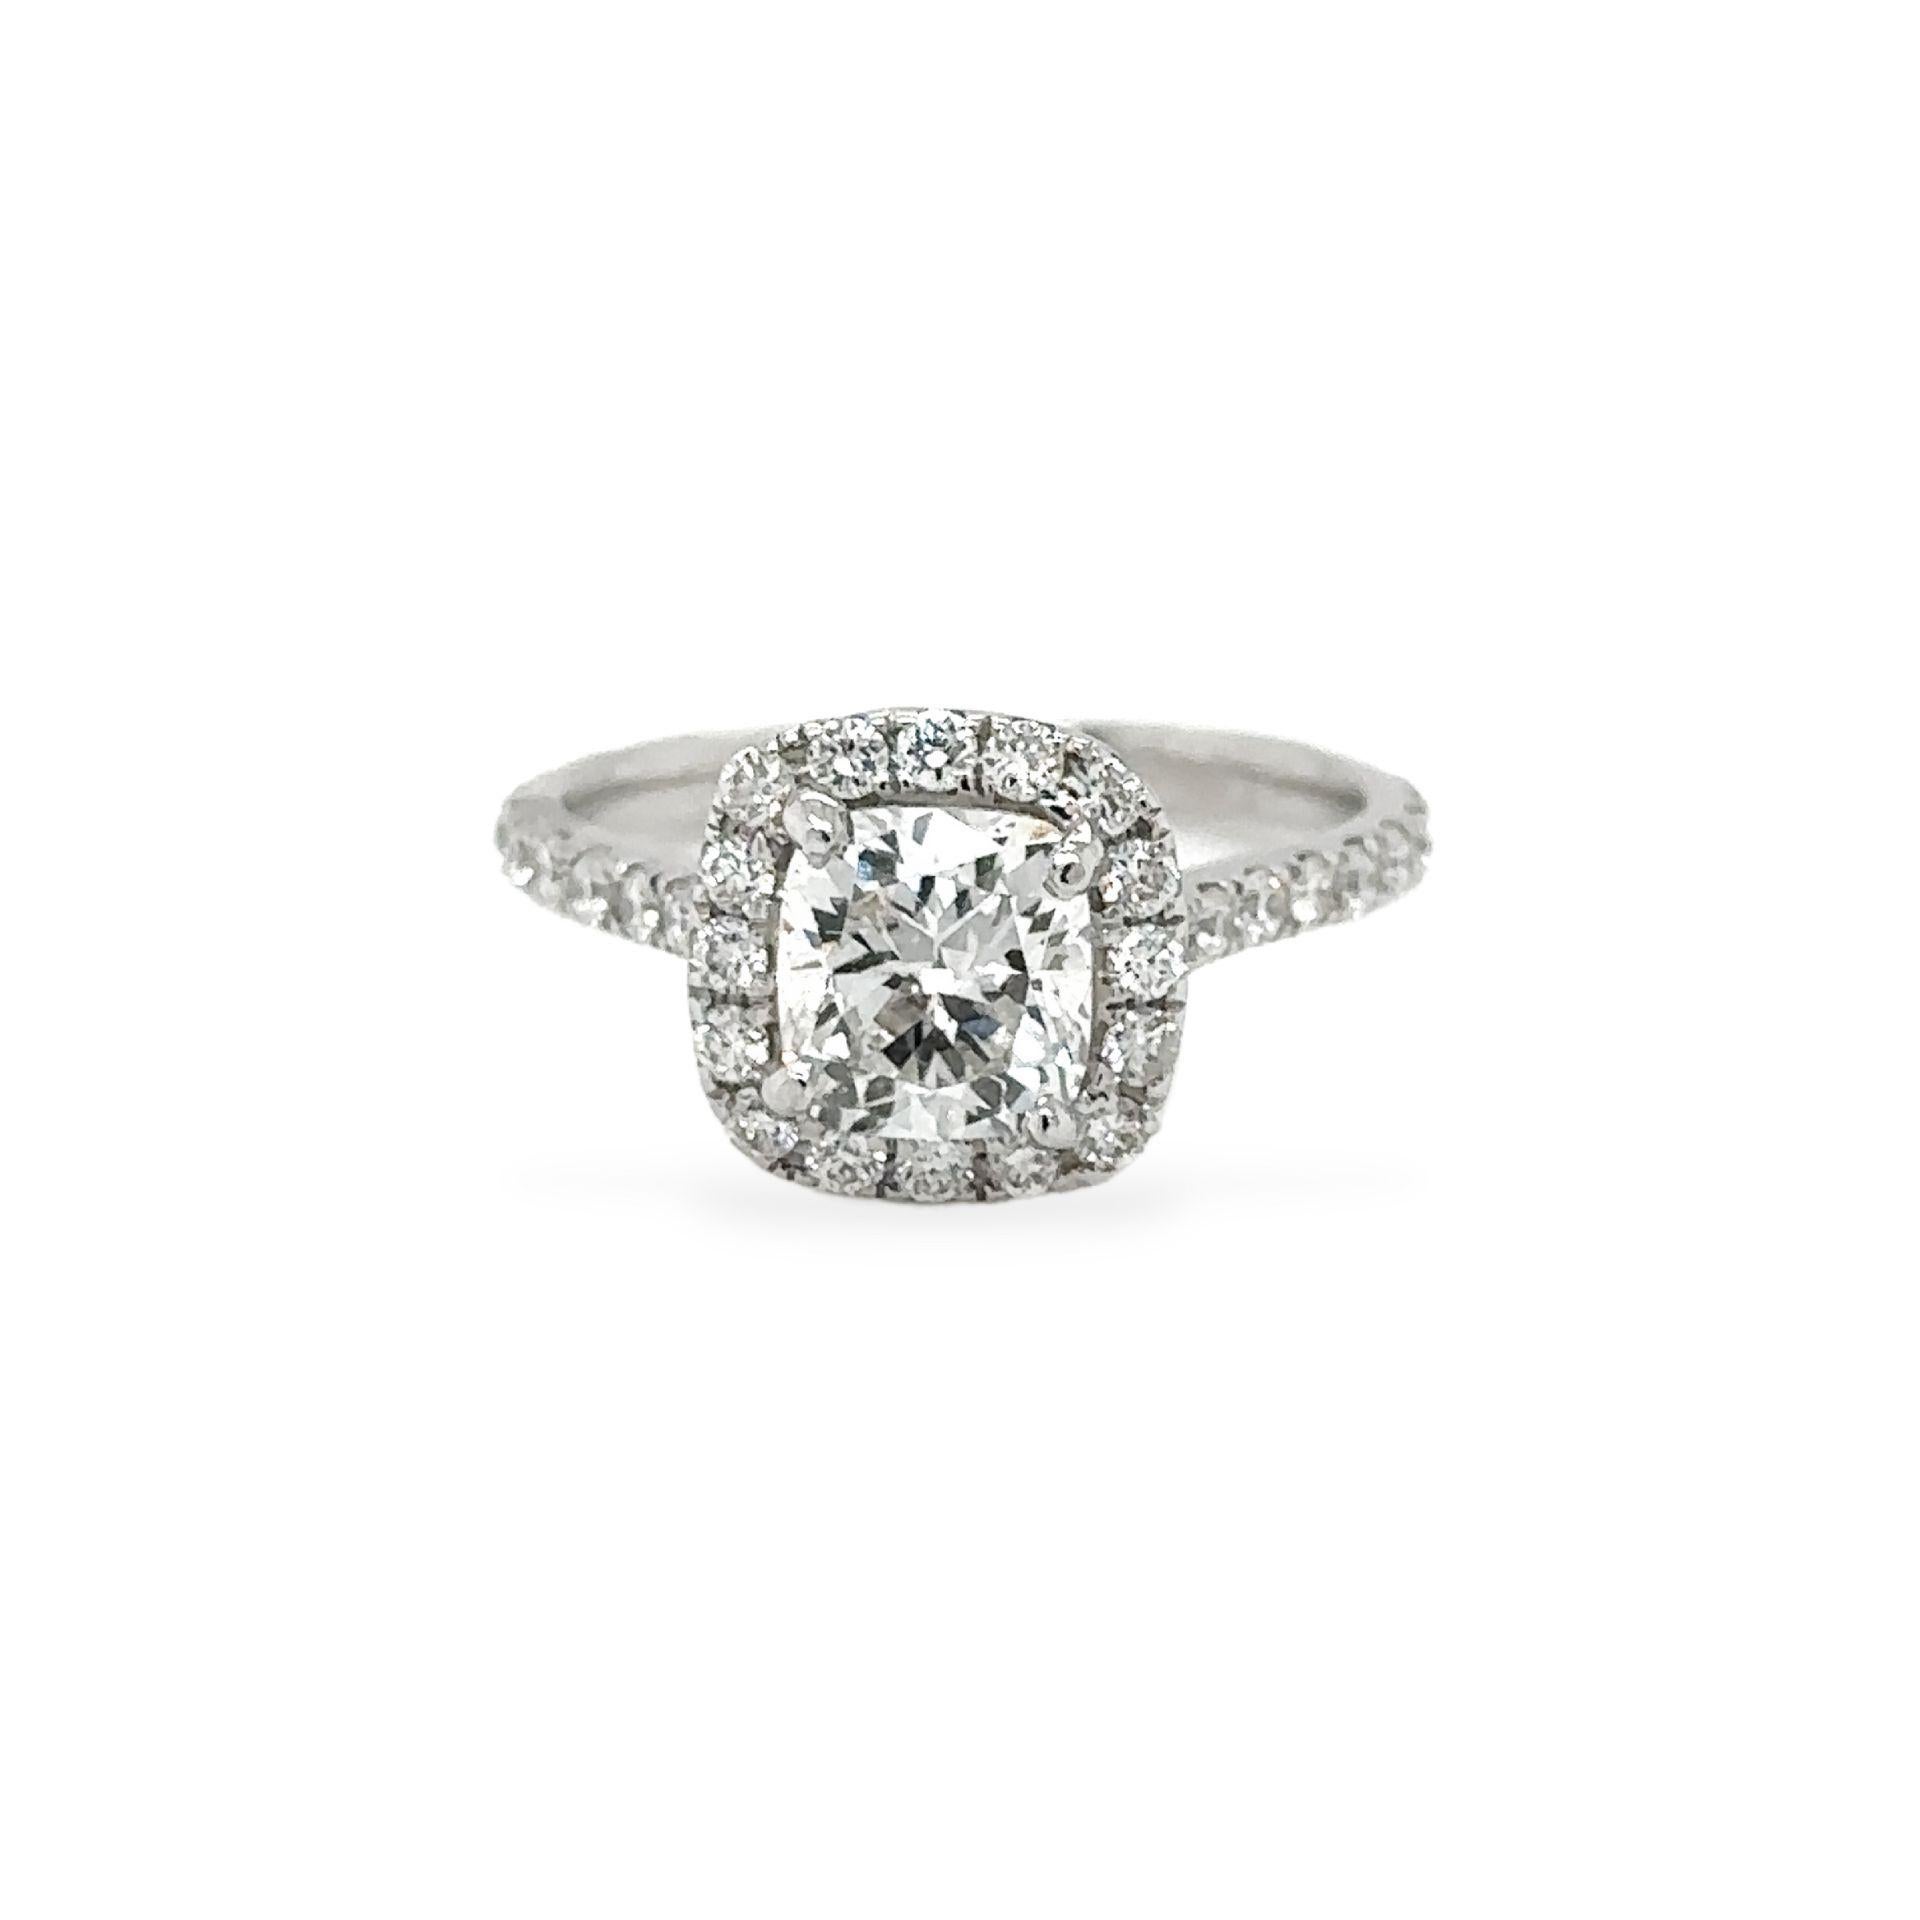 DIAMOND CUSHION CUT 2.02 CARATS ENGAGEMENT RING PLATINUM WITH GIA CERTIFICATE

Cushion Diamond Center Stone 1.17 carats 
 
